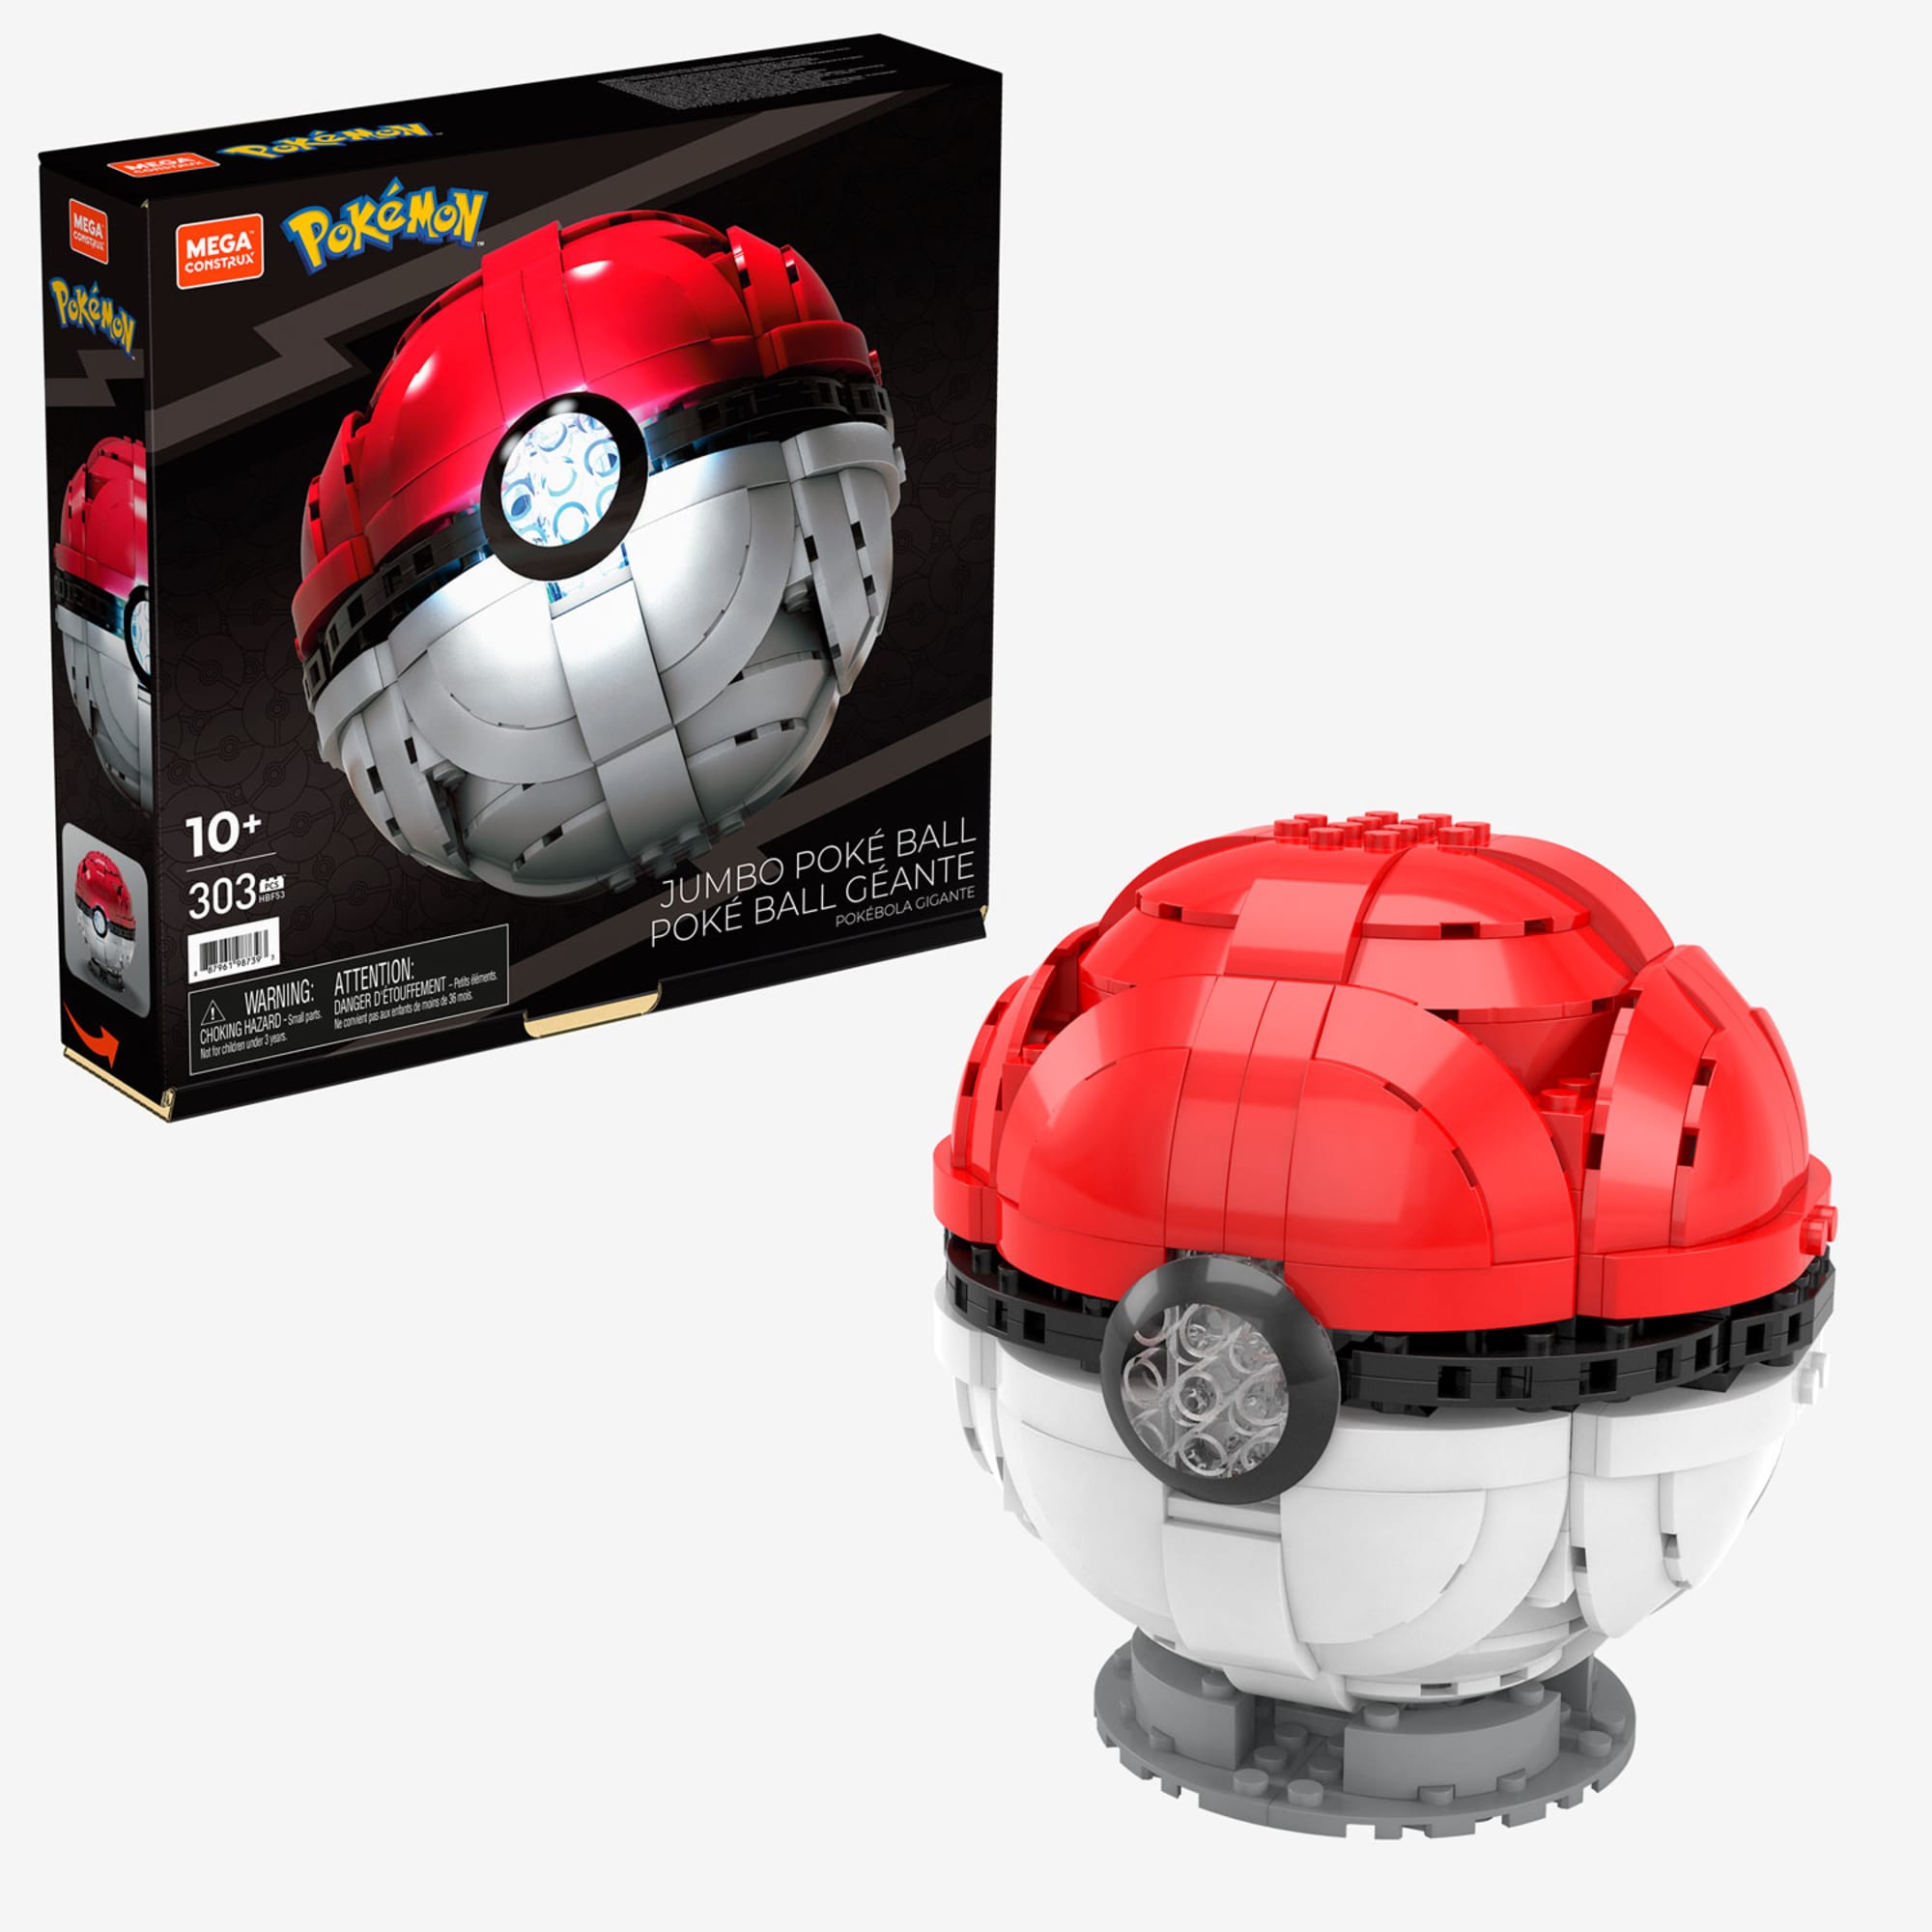 MEGA Pokemon Jumbo Poke Ball